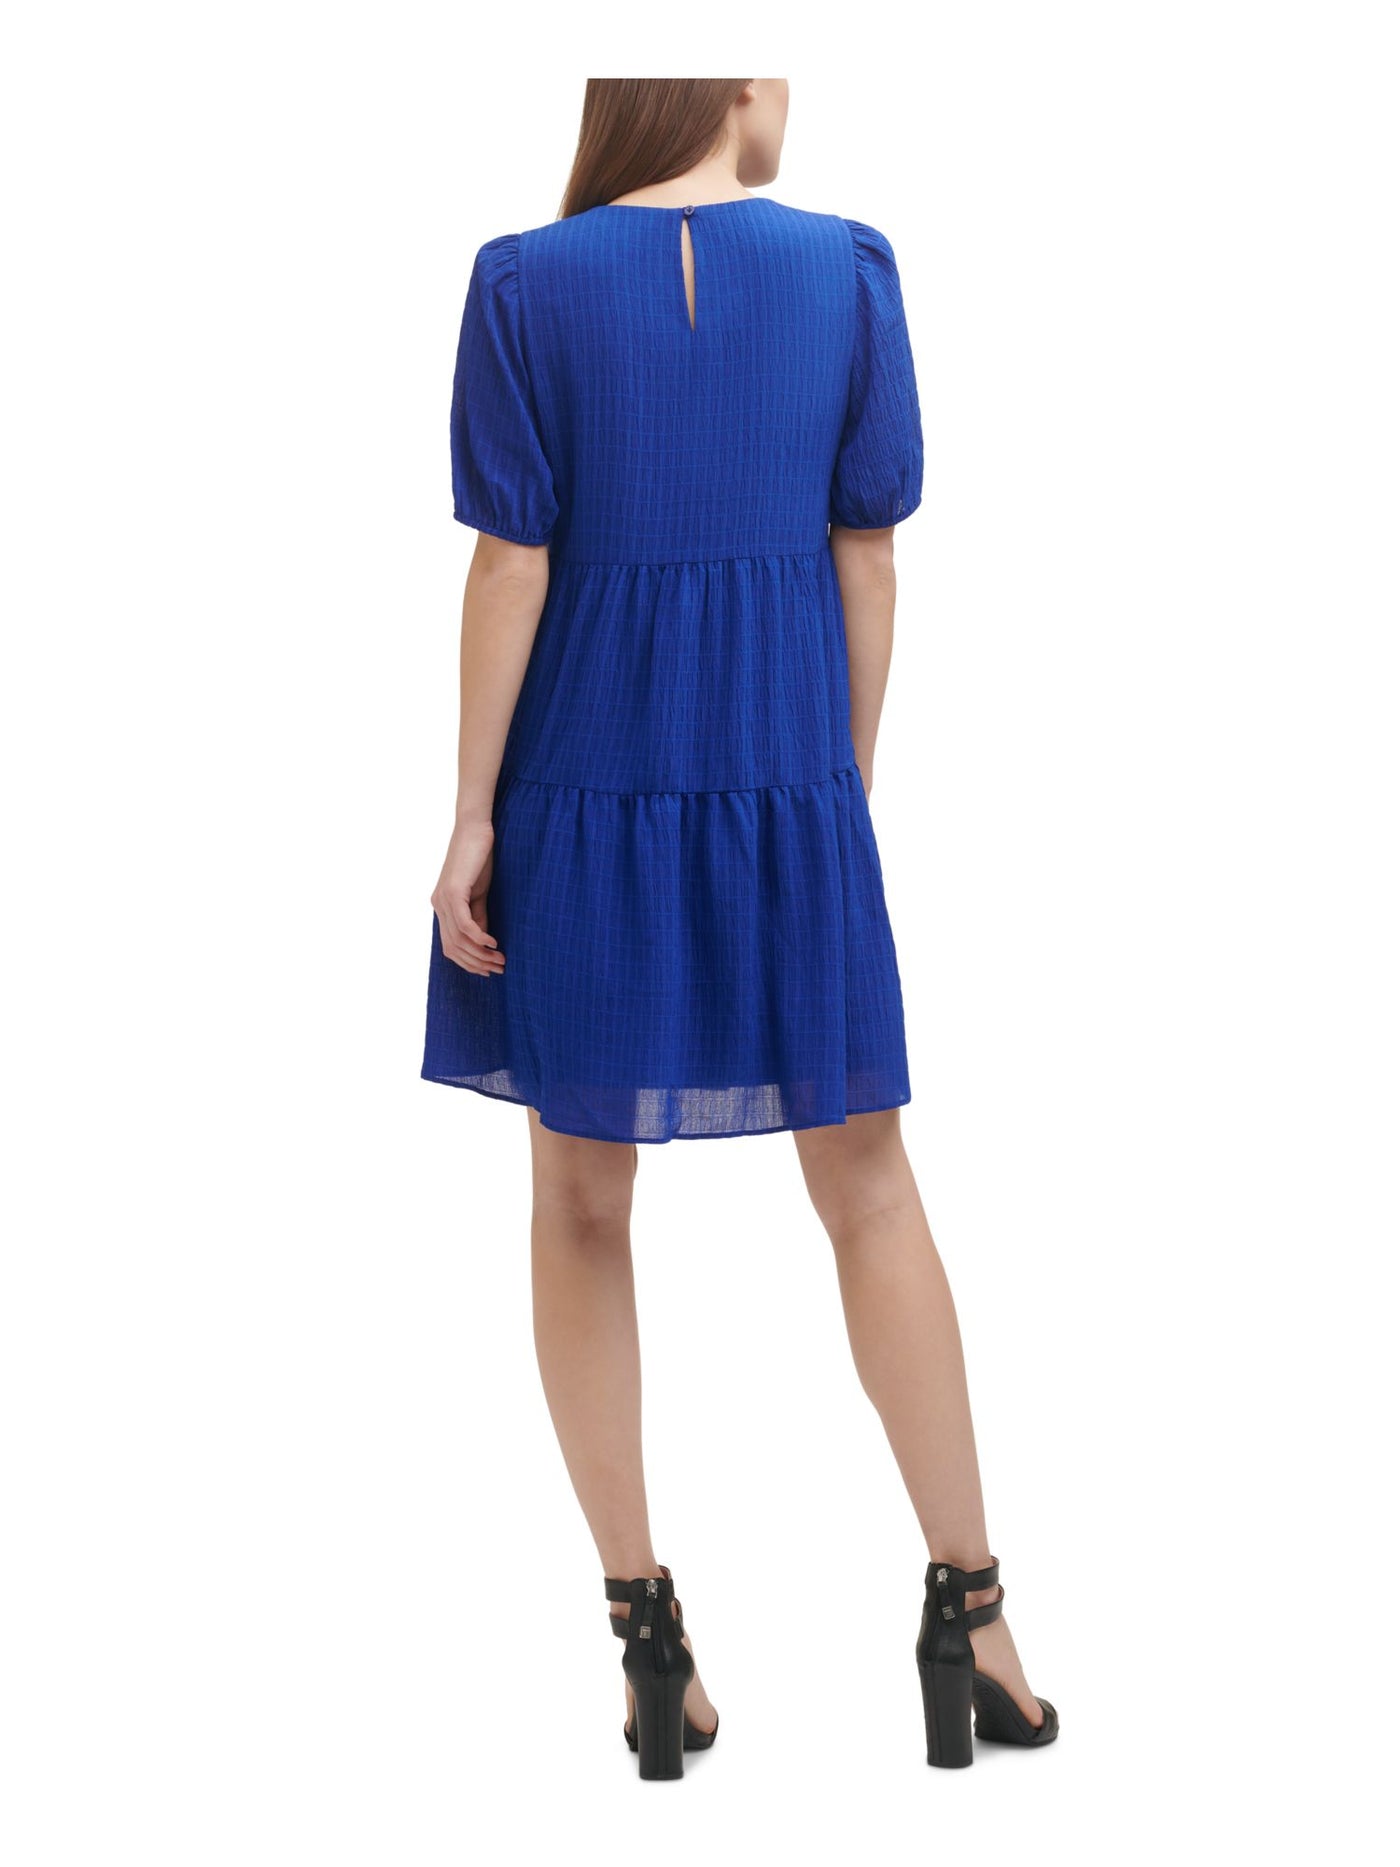 DKNY Womens Blue Textured Sheer Lined Short Sleeve Jewel Neck Short Evening Shift Dress 6